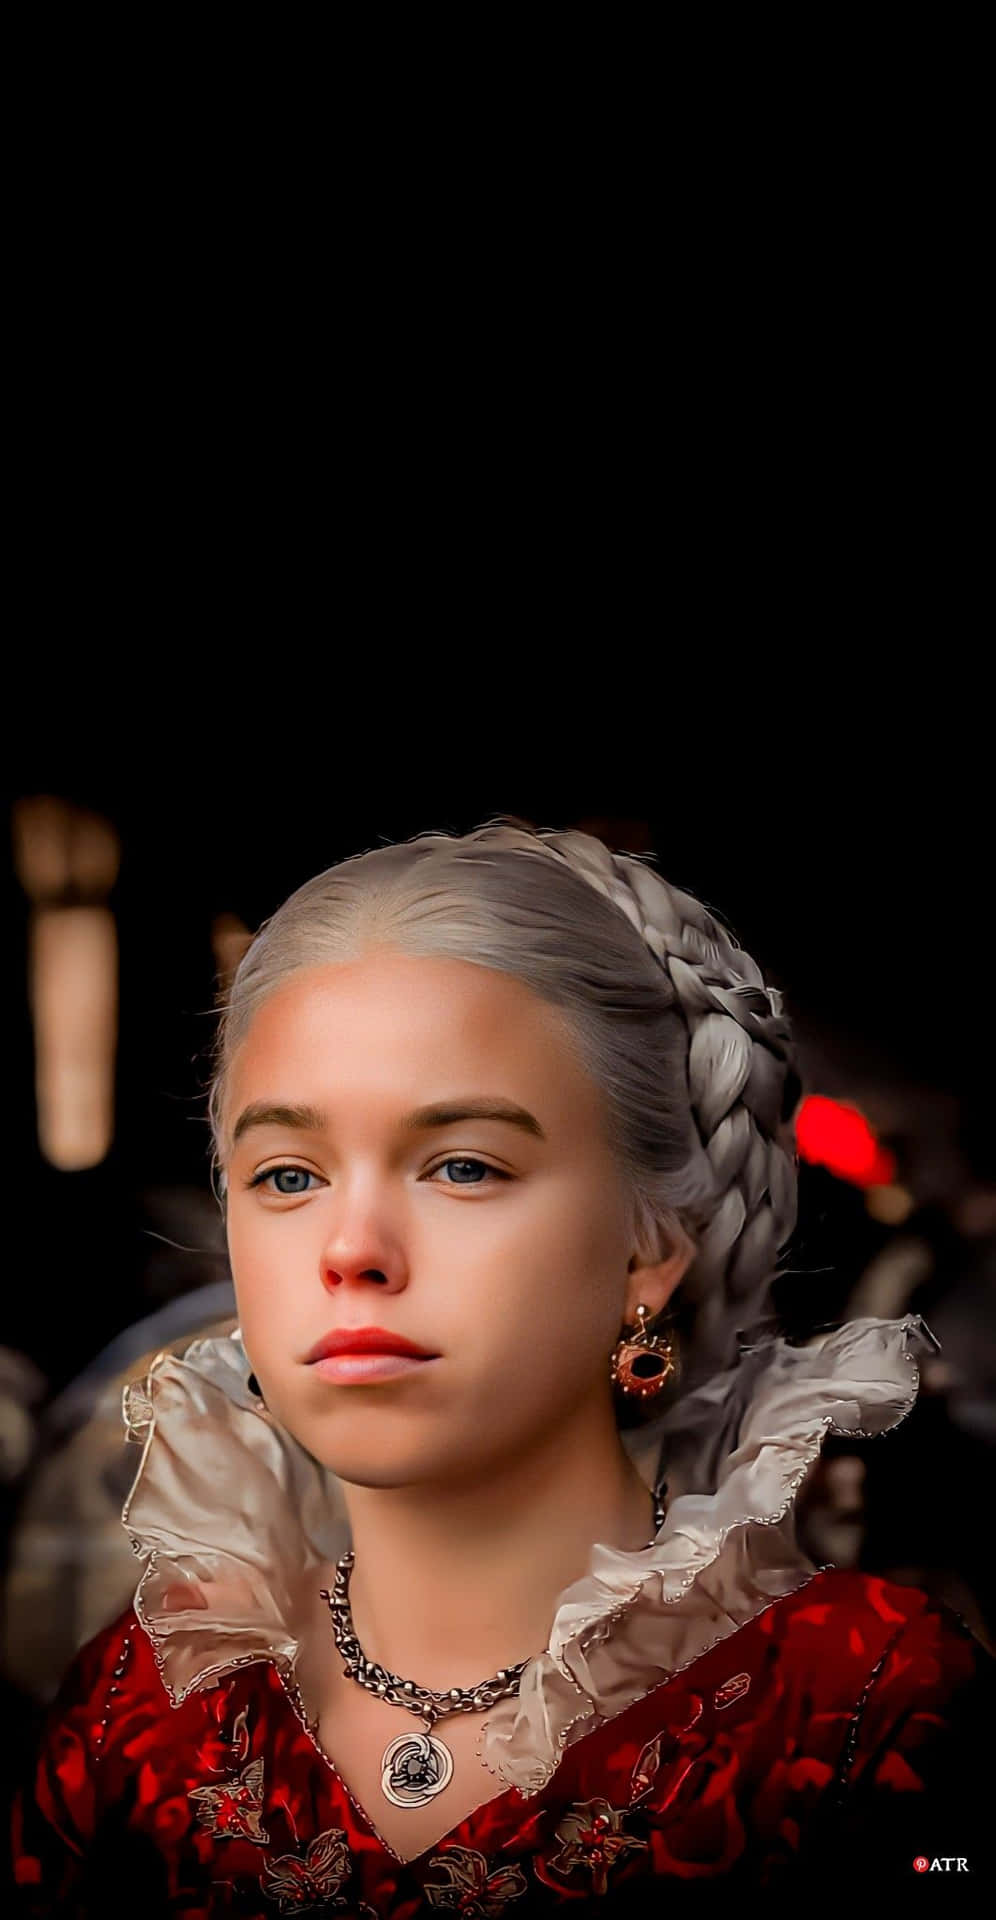 Rhaenyra Targaryen i Elegant Rød Kjole Wallpaper